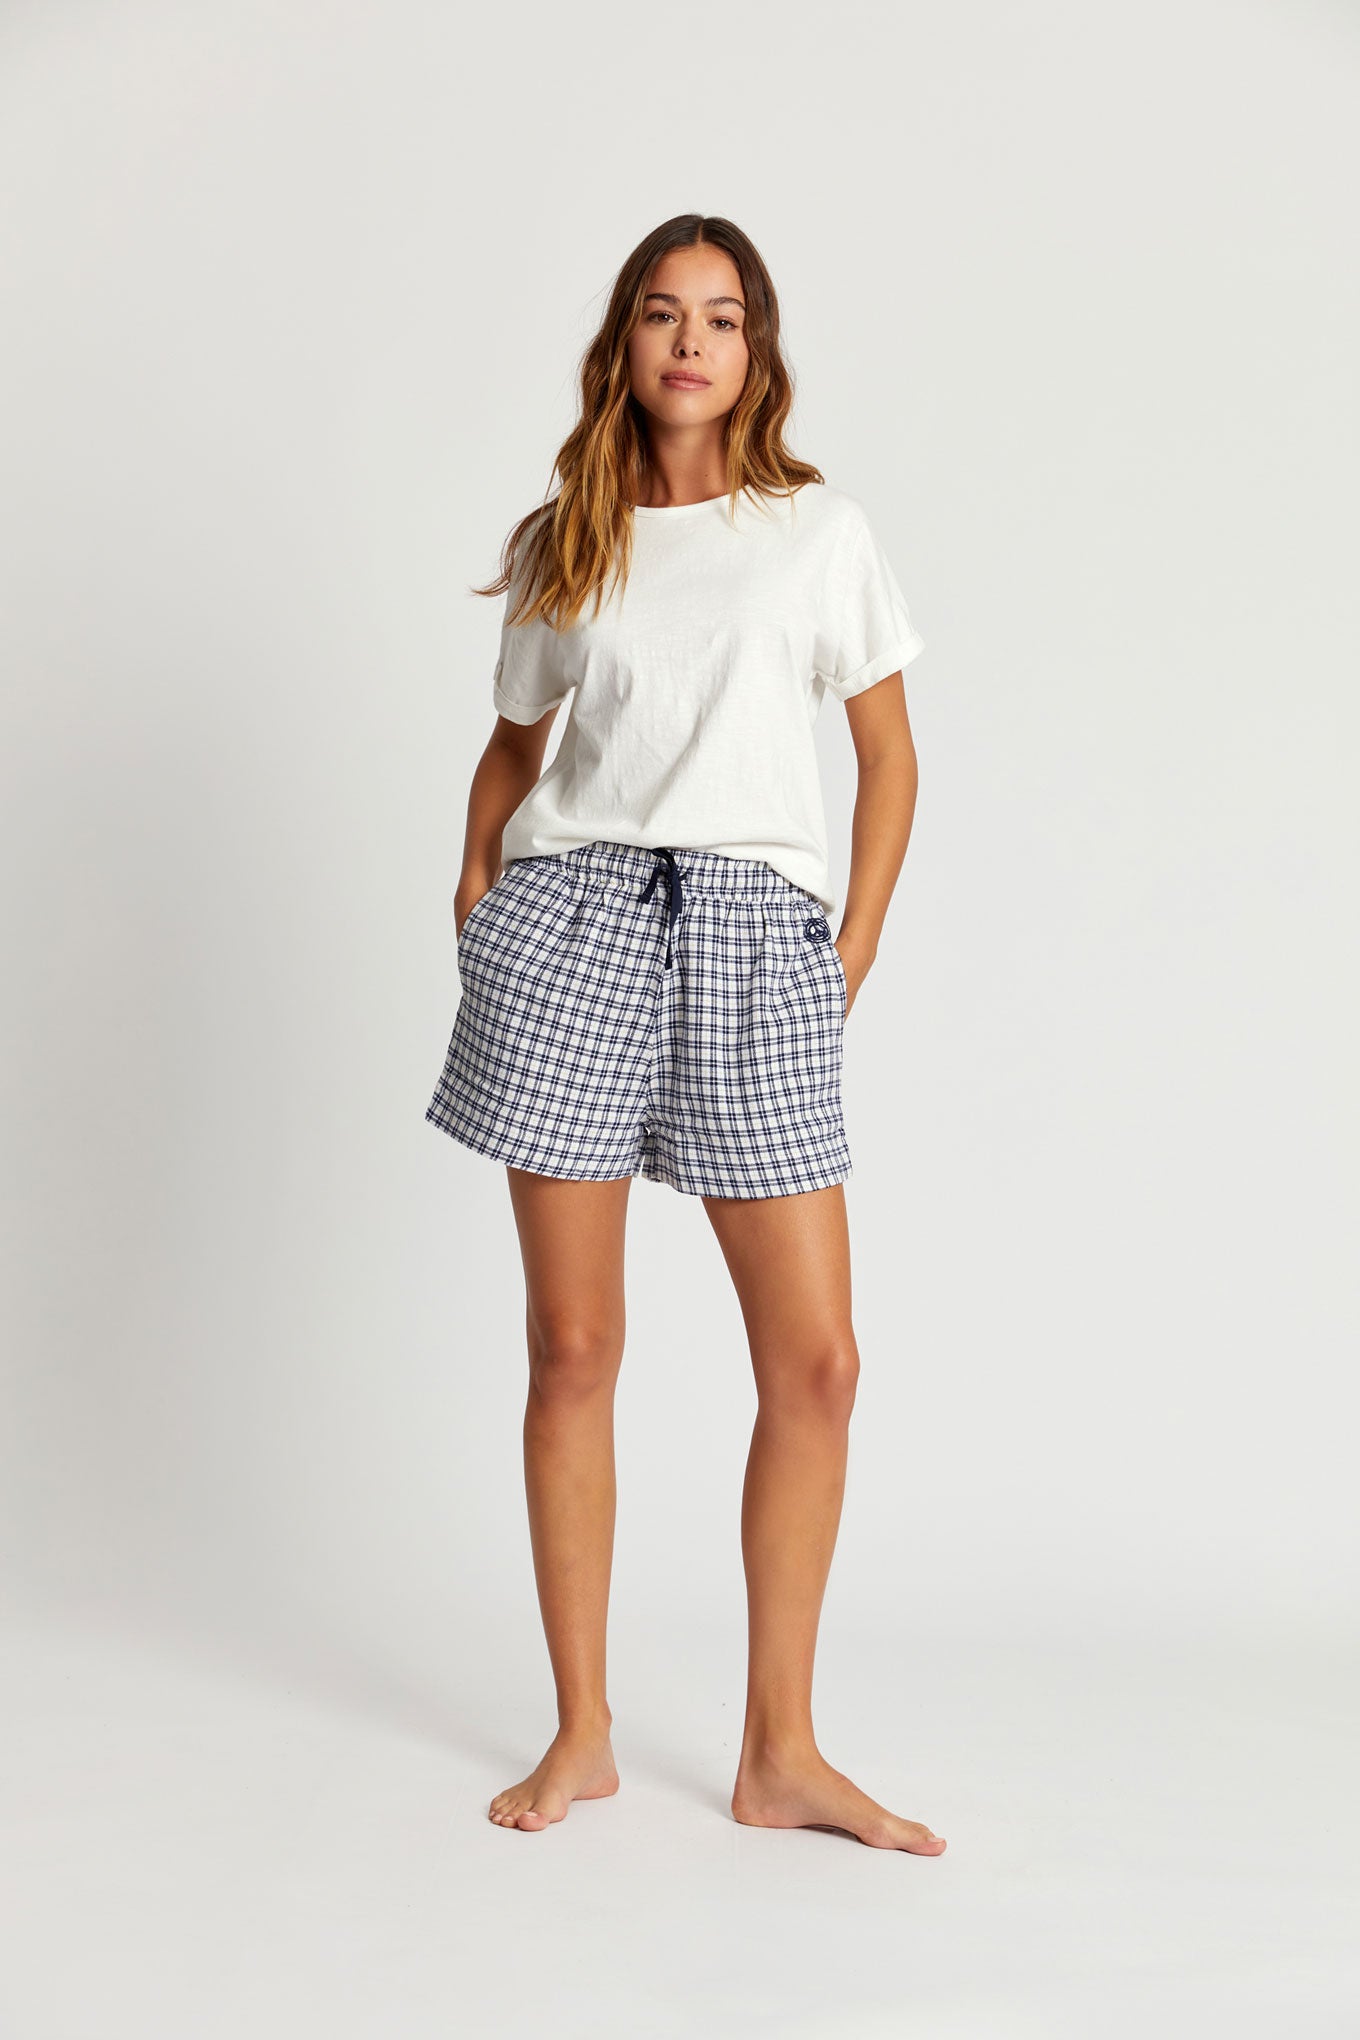 JIM JAM Womens - GOTS Organic Cotton Pyjama Shorts White, Size 3 / UK 12 / EUR 40